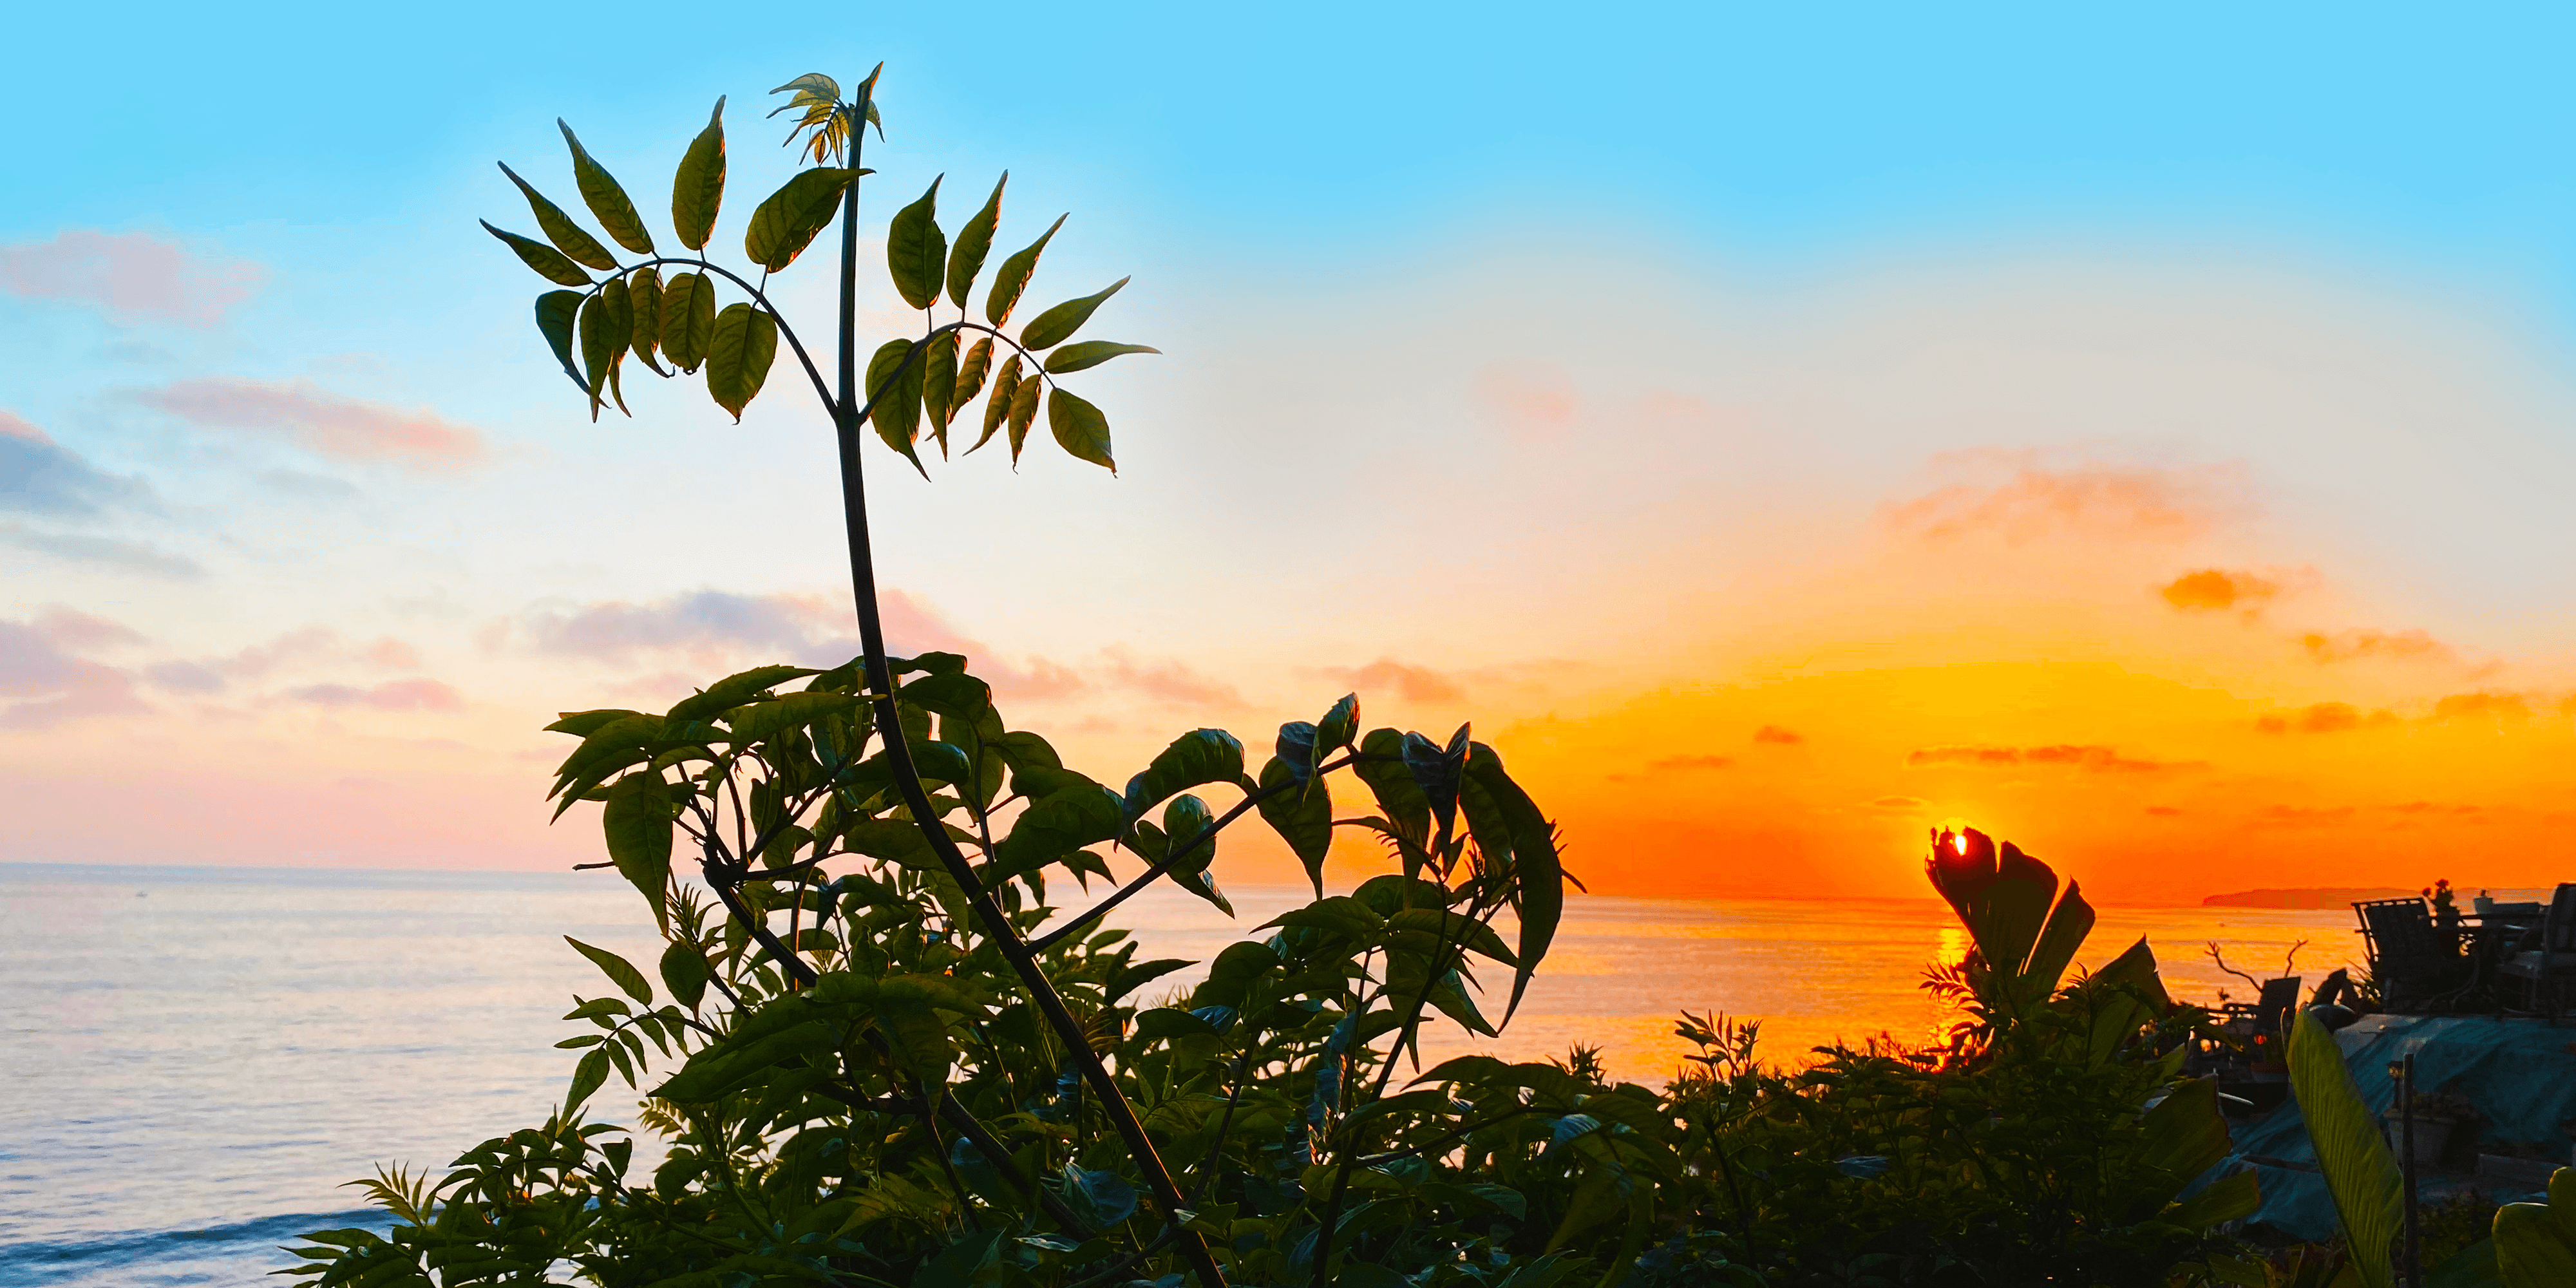 "Laguna Sunset from Thalia" 72"X36" / Photo - Digital / 2017 / Tribute to Sue